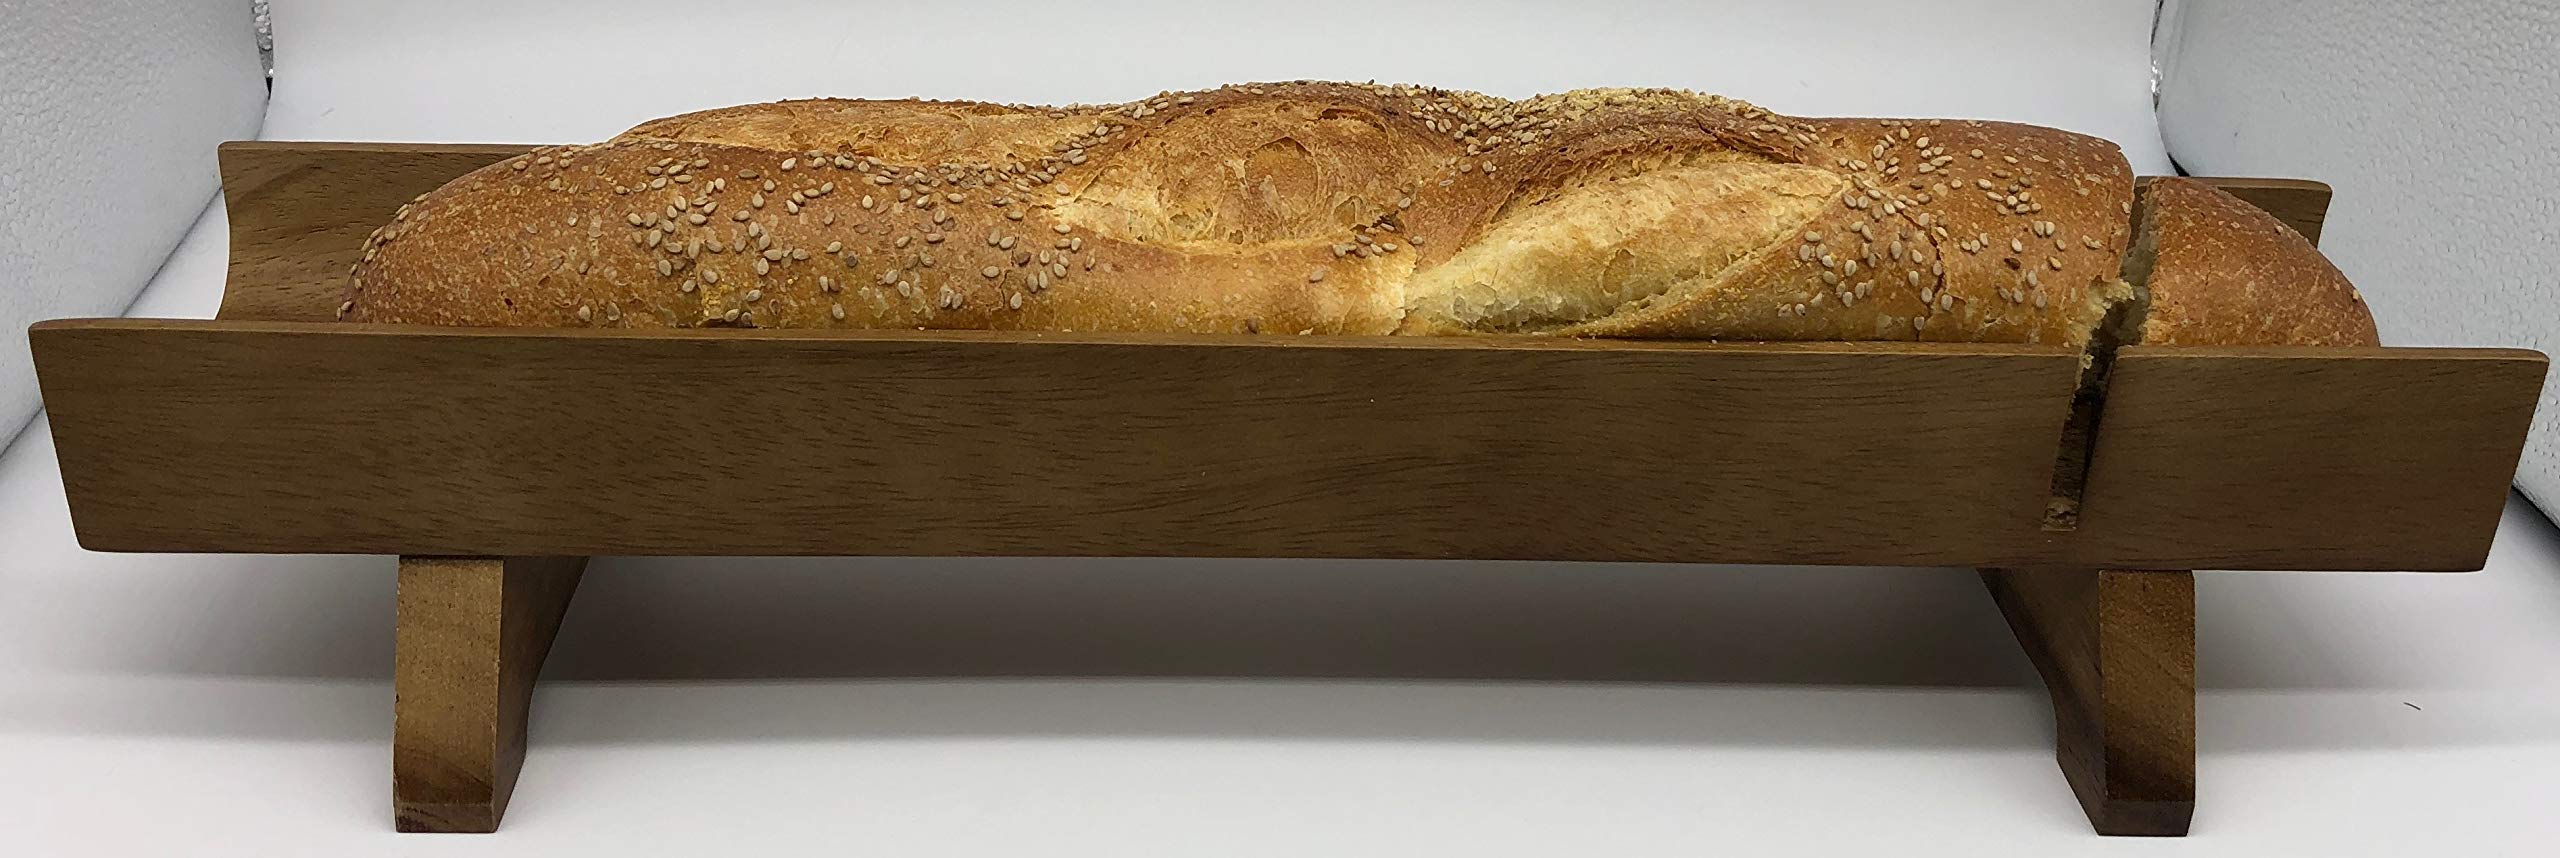 Kalmar Home Acacia Wood Raised French Bread Server